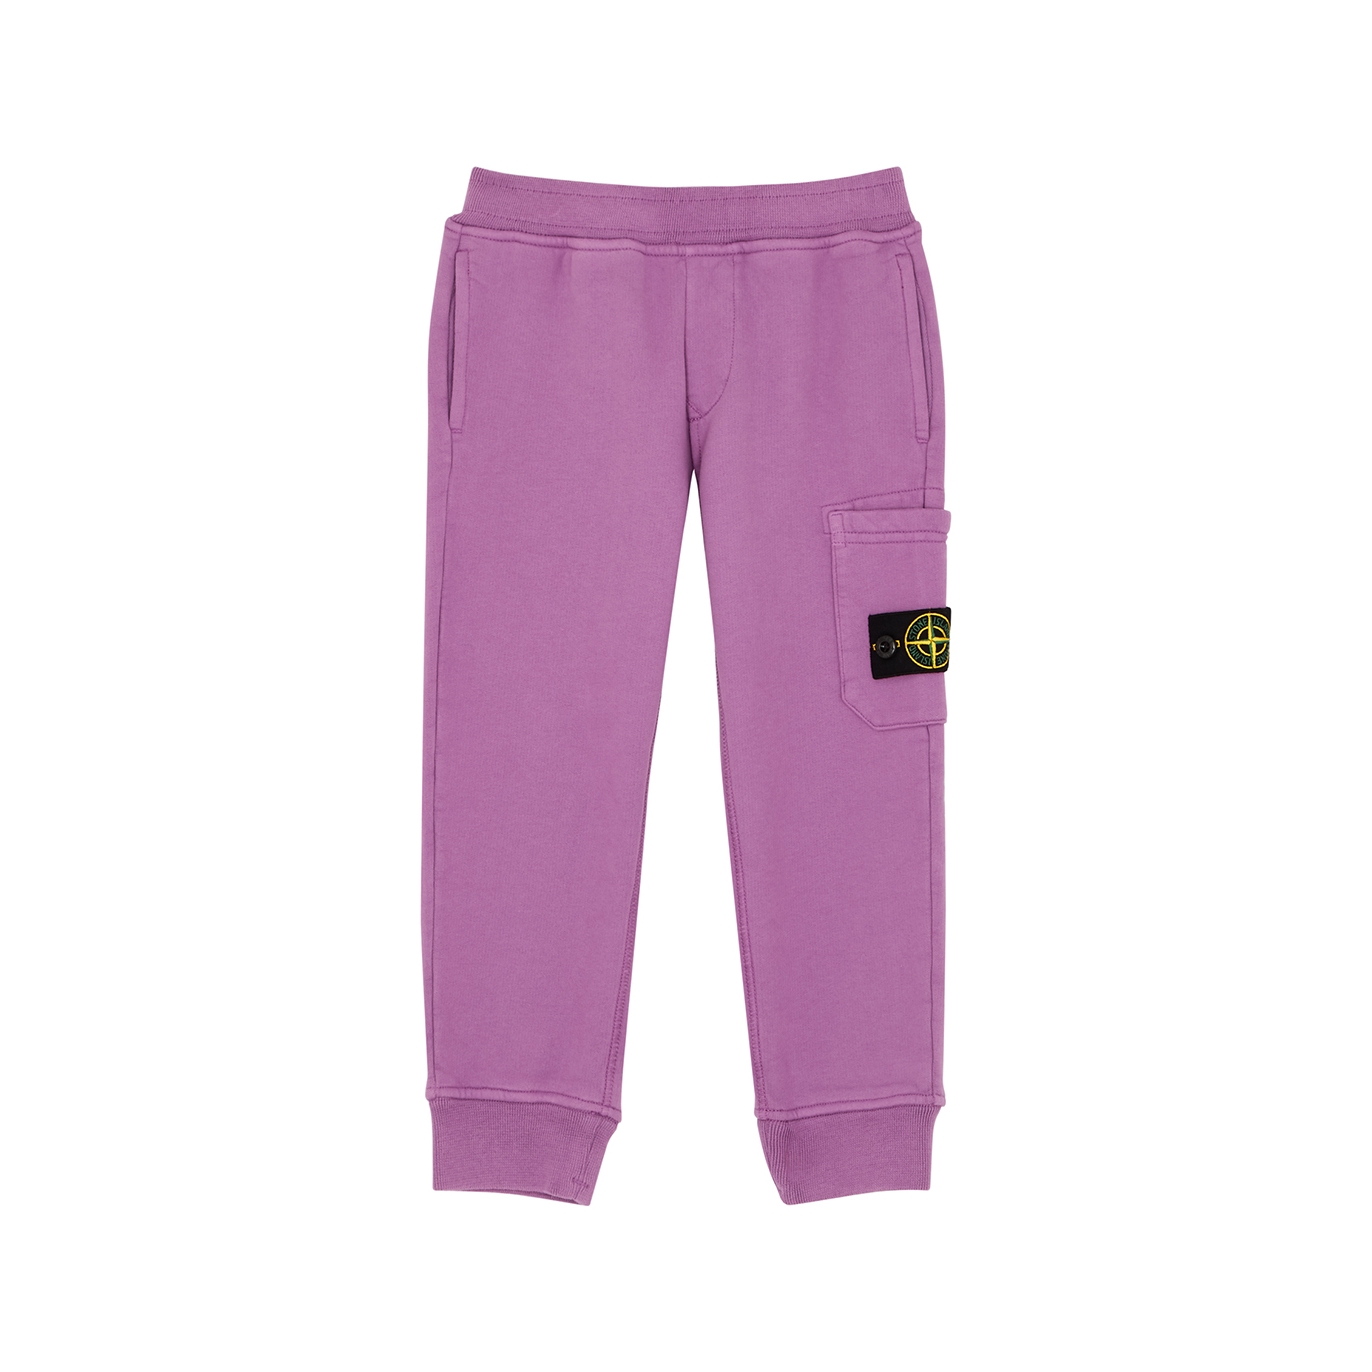 Stone Island Kids Purple Cotton Sweatpants (2-4 Years) - Fuchsia